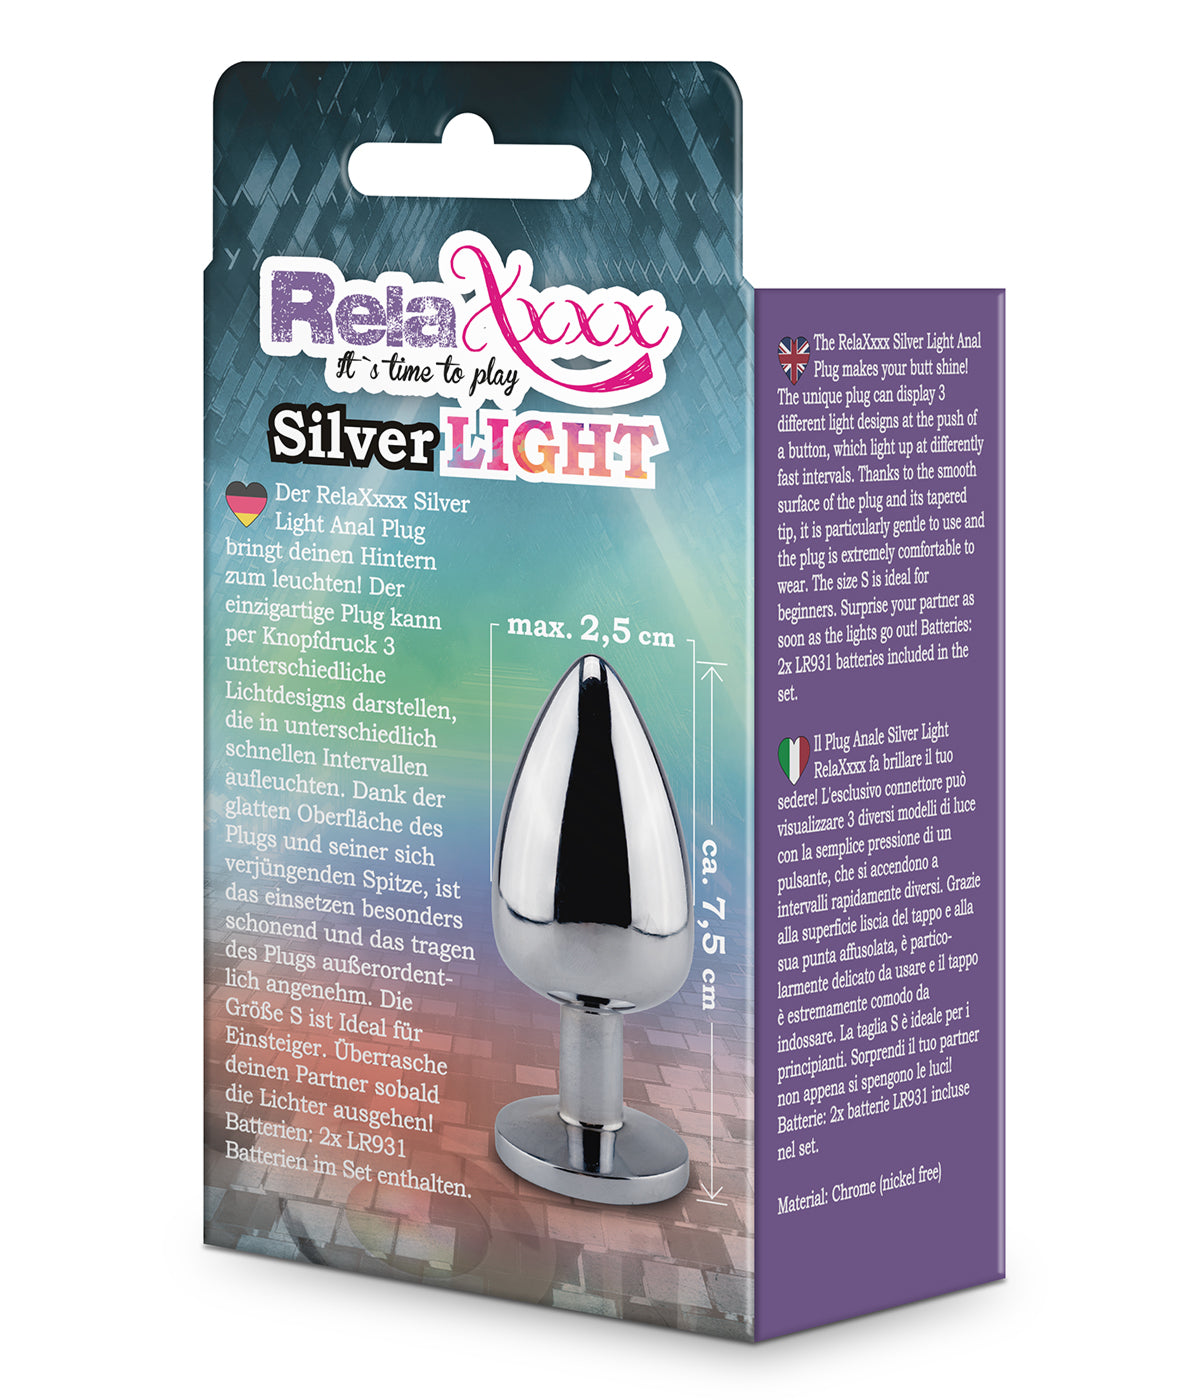 MVW Relaxxx Silver Plug with Flashlight - Small